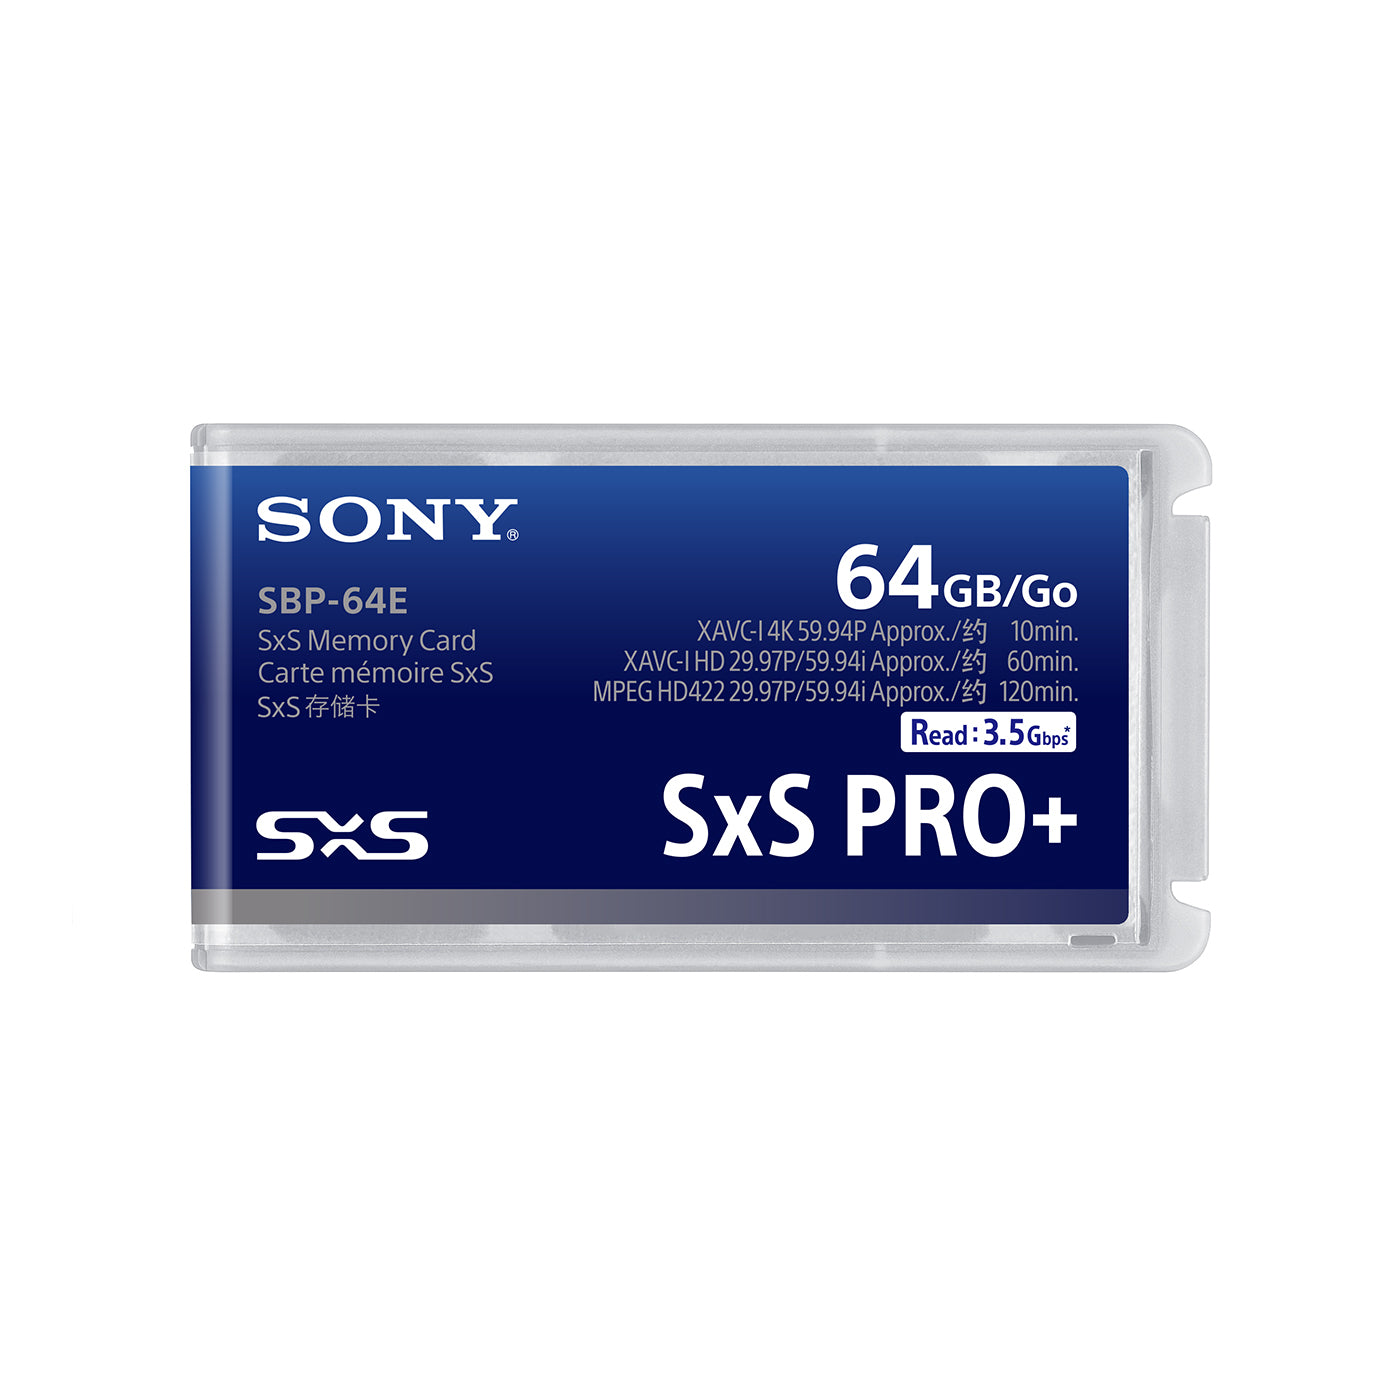 SBP-64E - SXS Pro Plus Memory Card 64GB